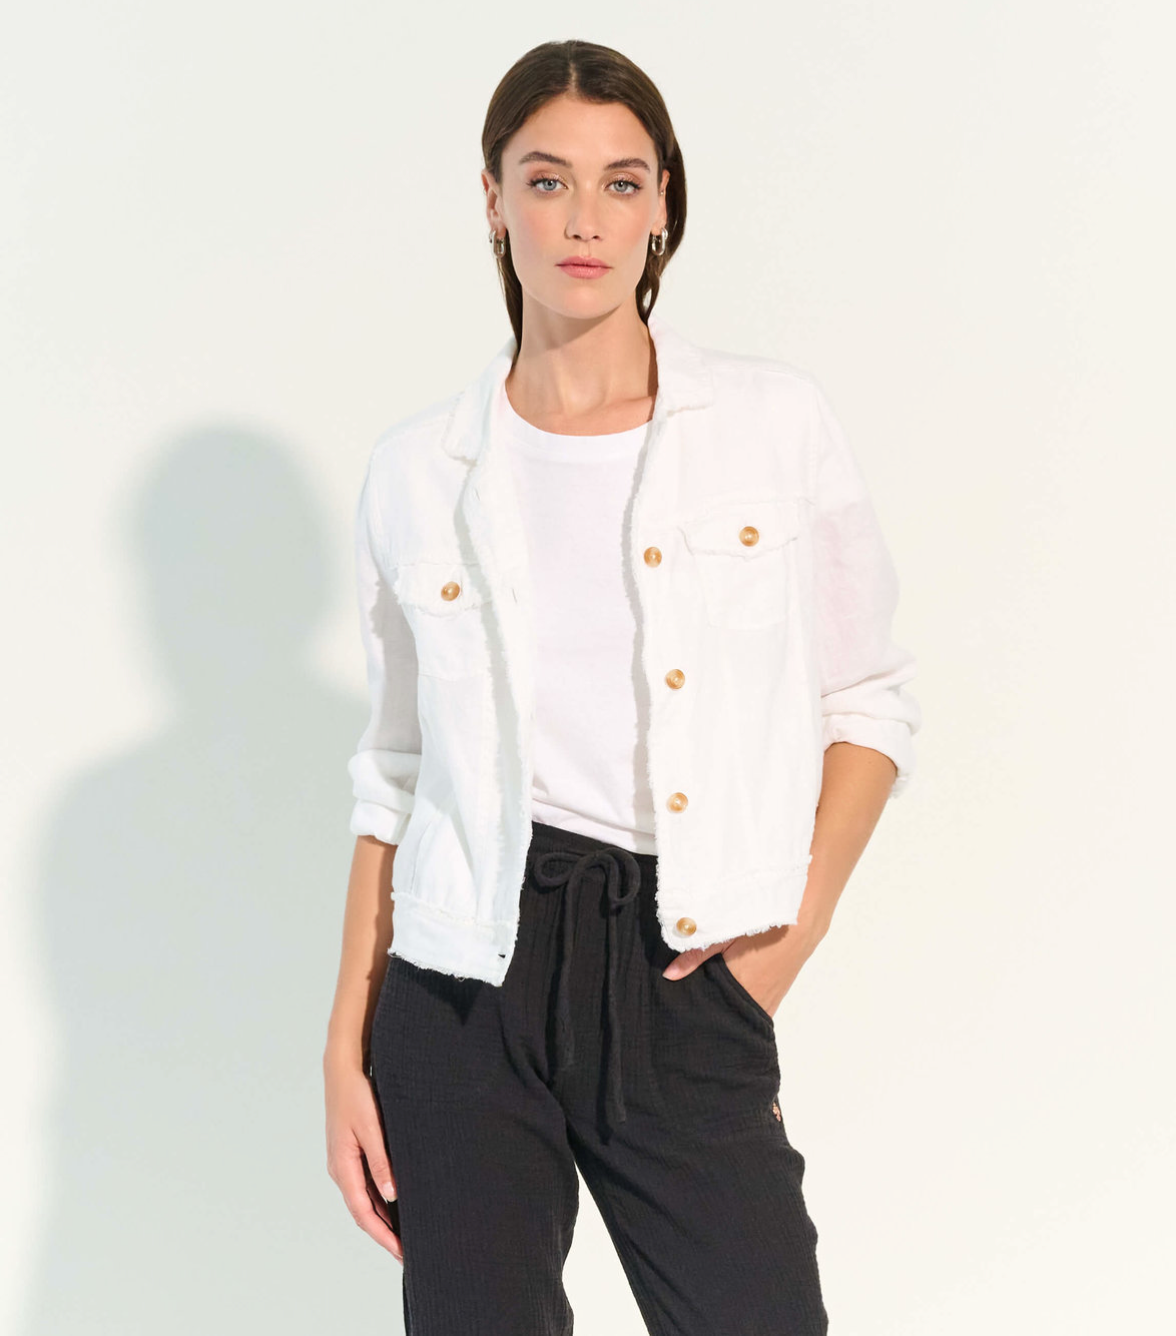 Linen Jacket - White